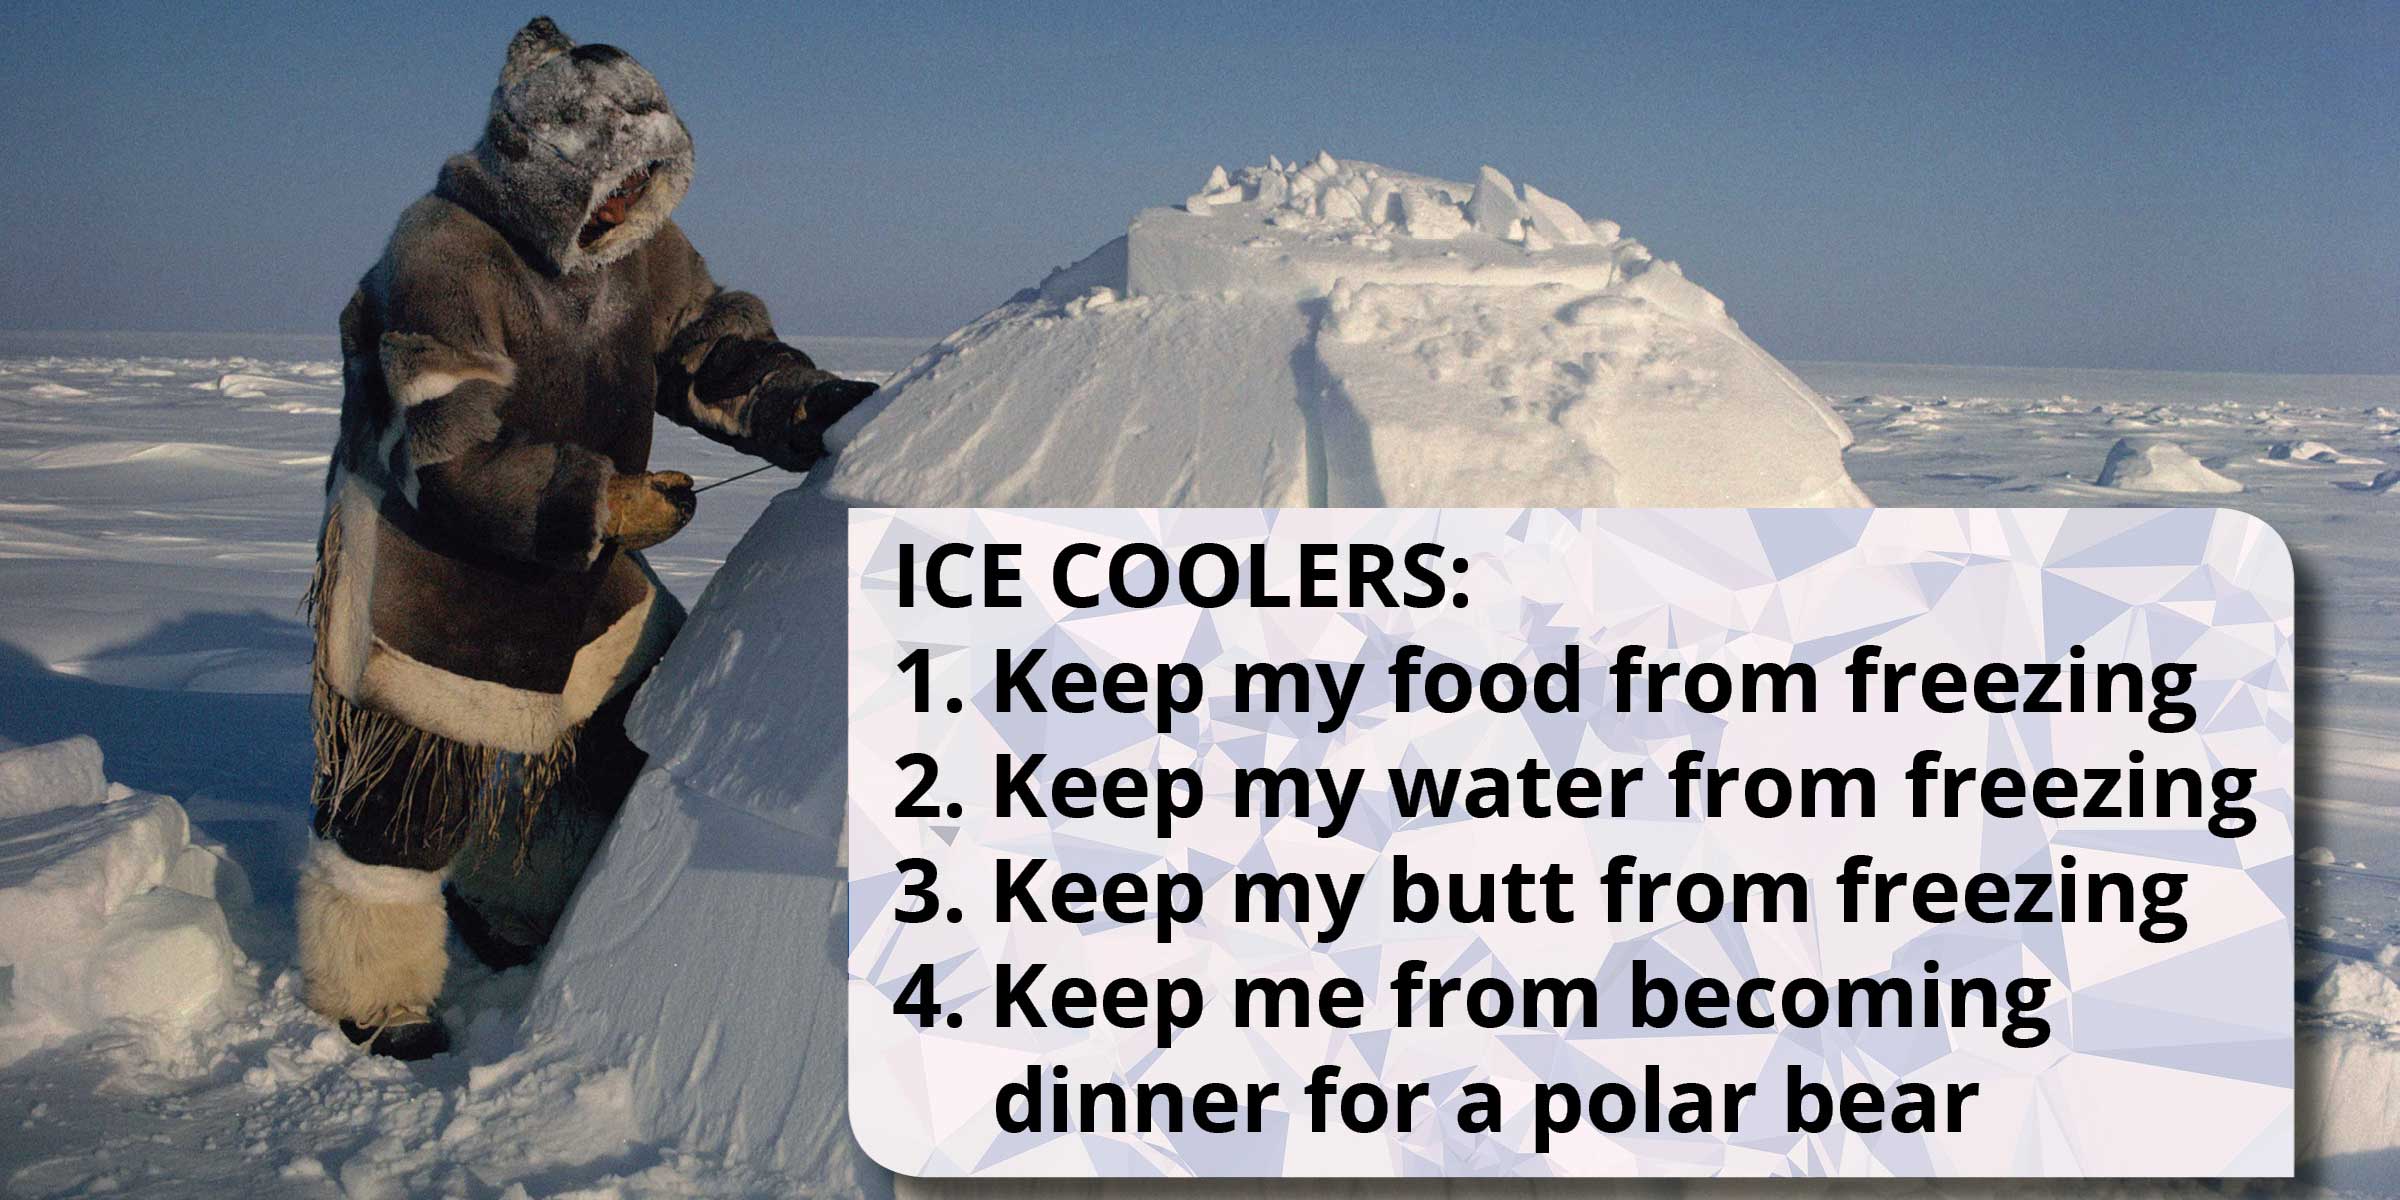 List of selling ice coolers to Eskimos Inuit